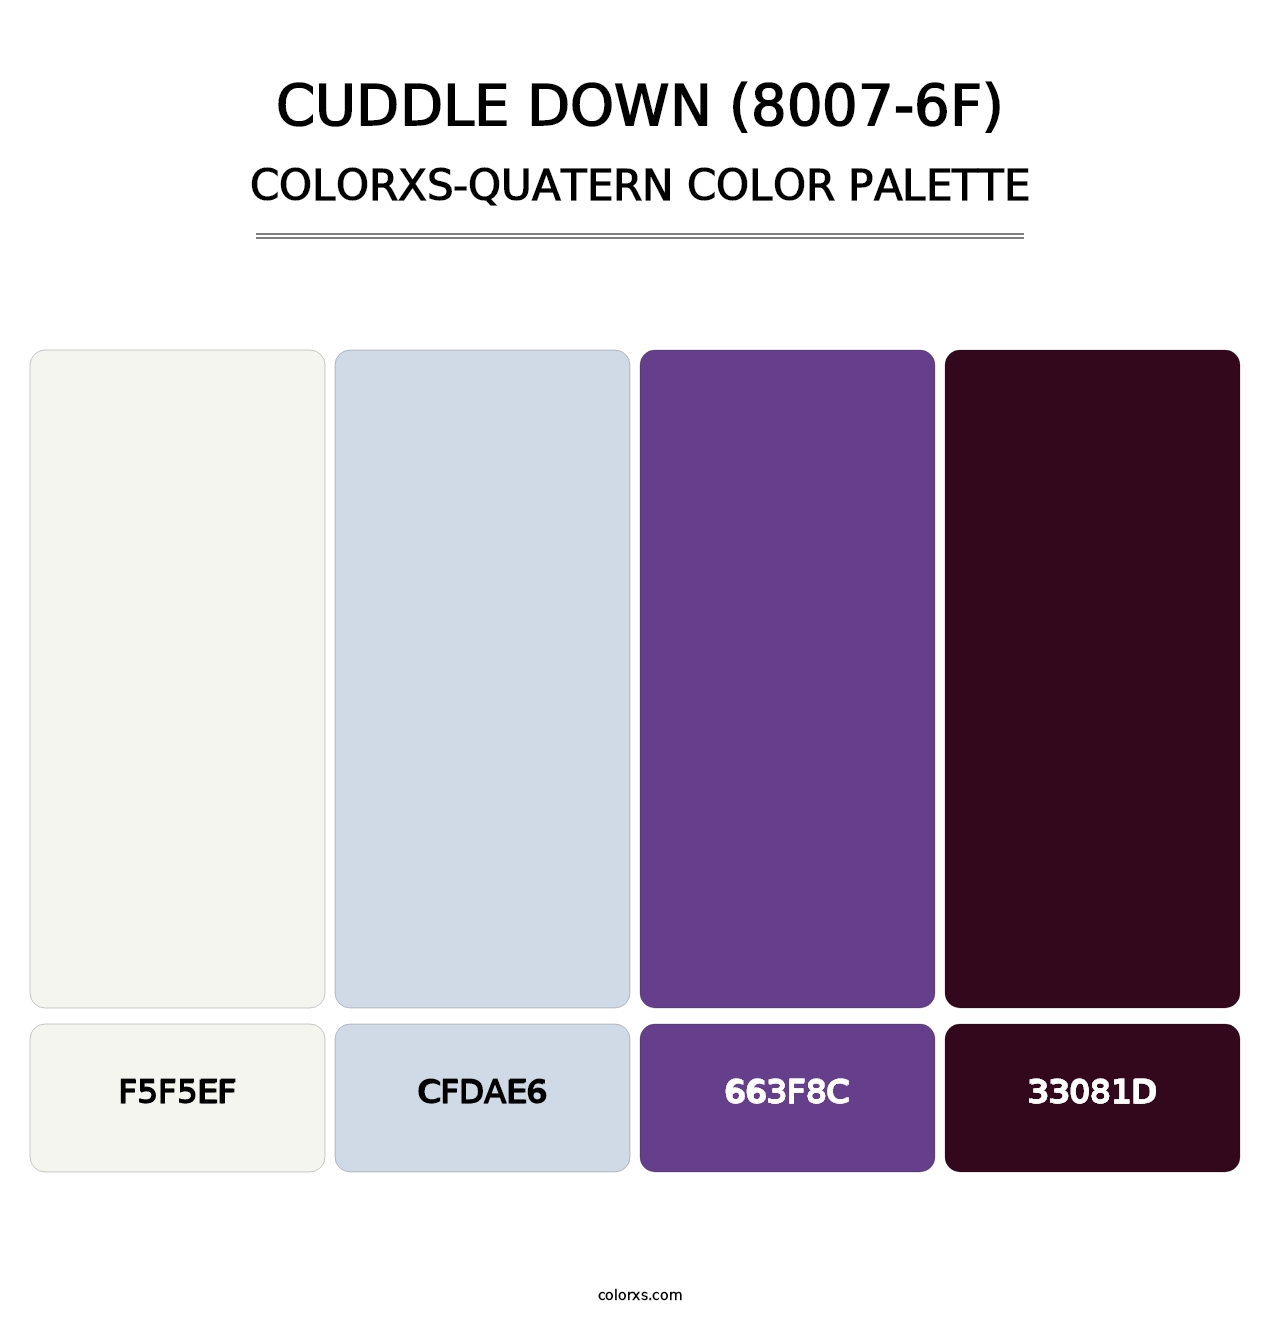 Cuddle Down (8007-6F) - Colorxs Quatern Palette